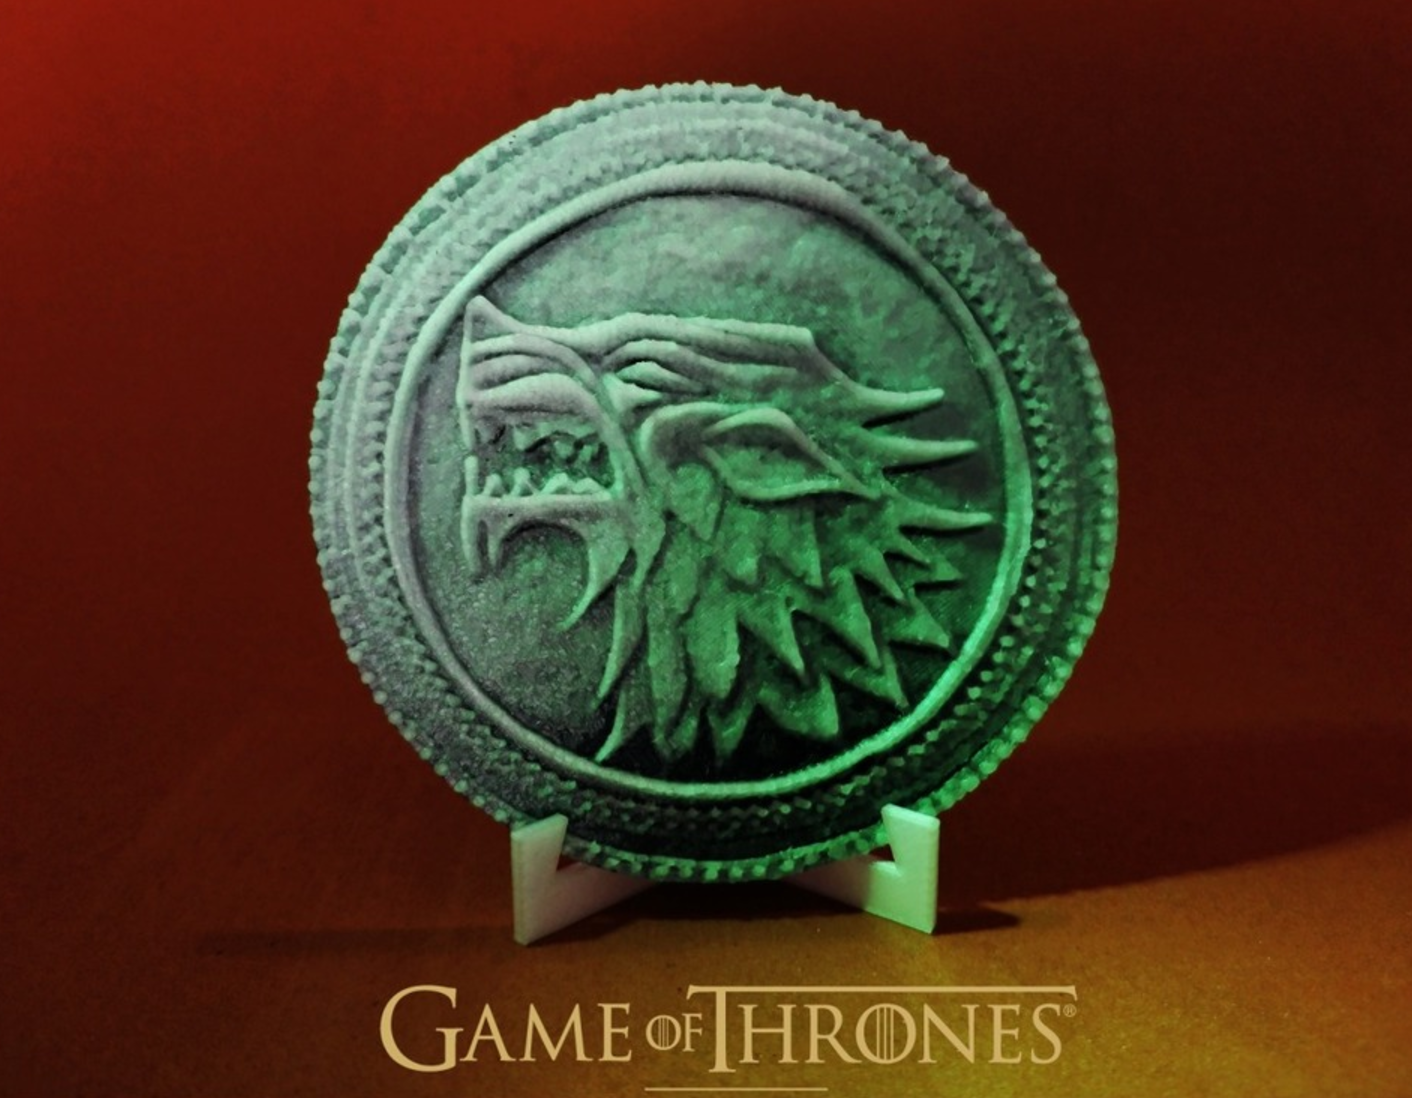 Capture d’écran 2017-09-05 à 11.03.38.png Download free STL file Game Of Thrones coin • 3D printable design, 3dlito